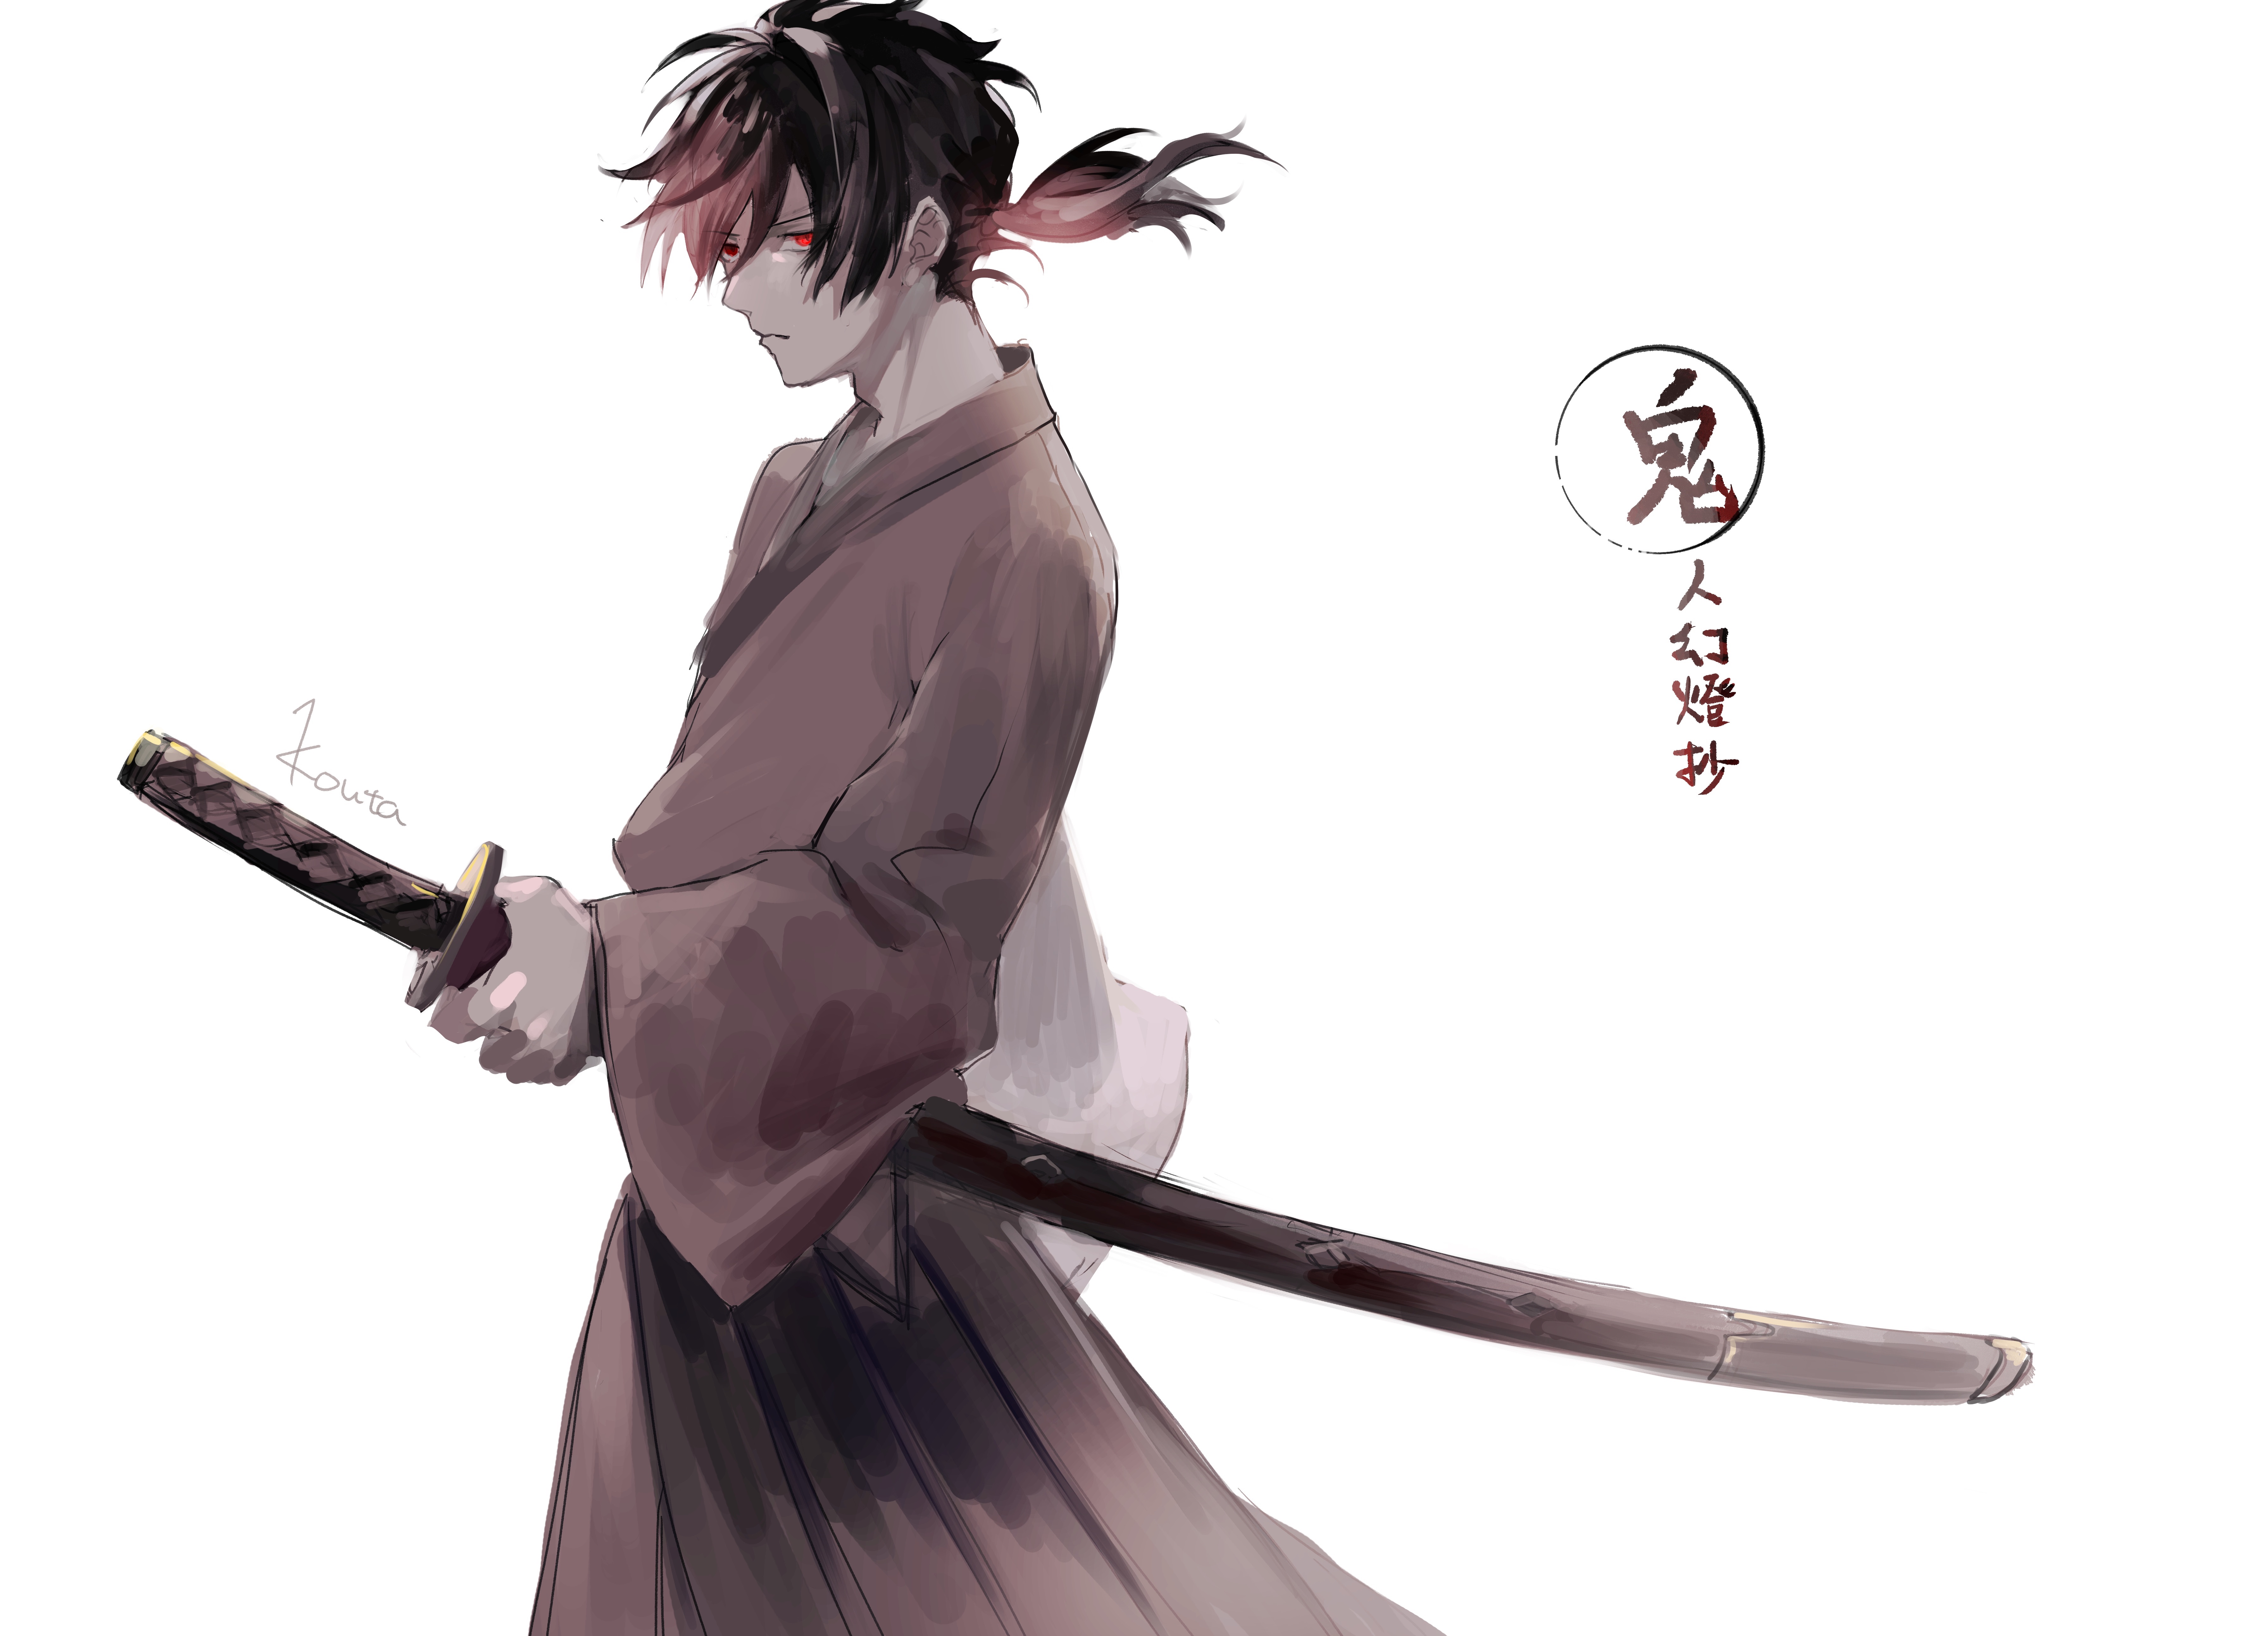 1008325 descargar imagen animado, samurai: fondos de pantalla y protectores de pantalla gratis